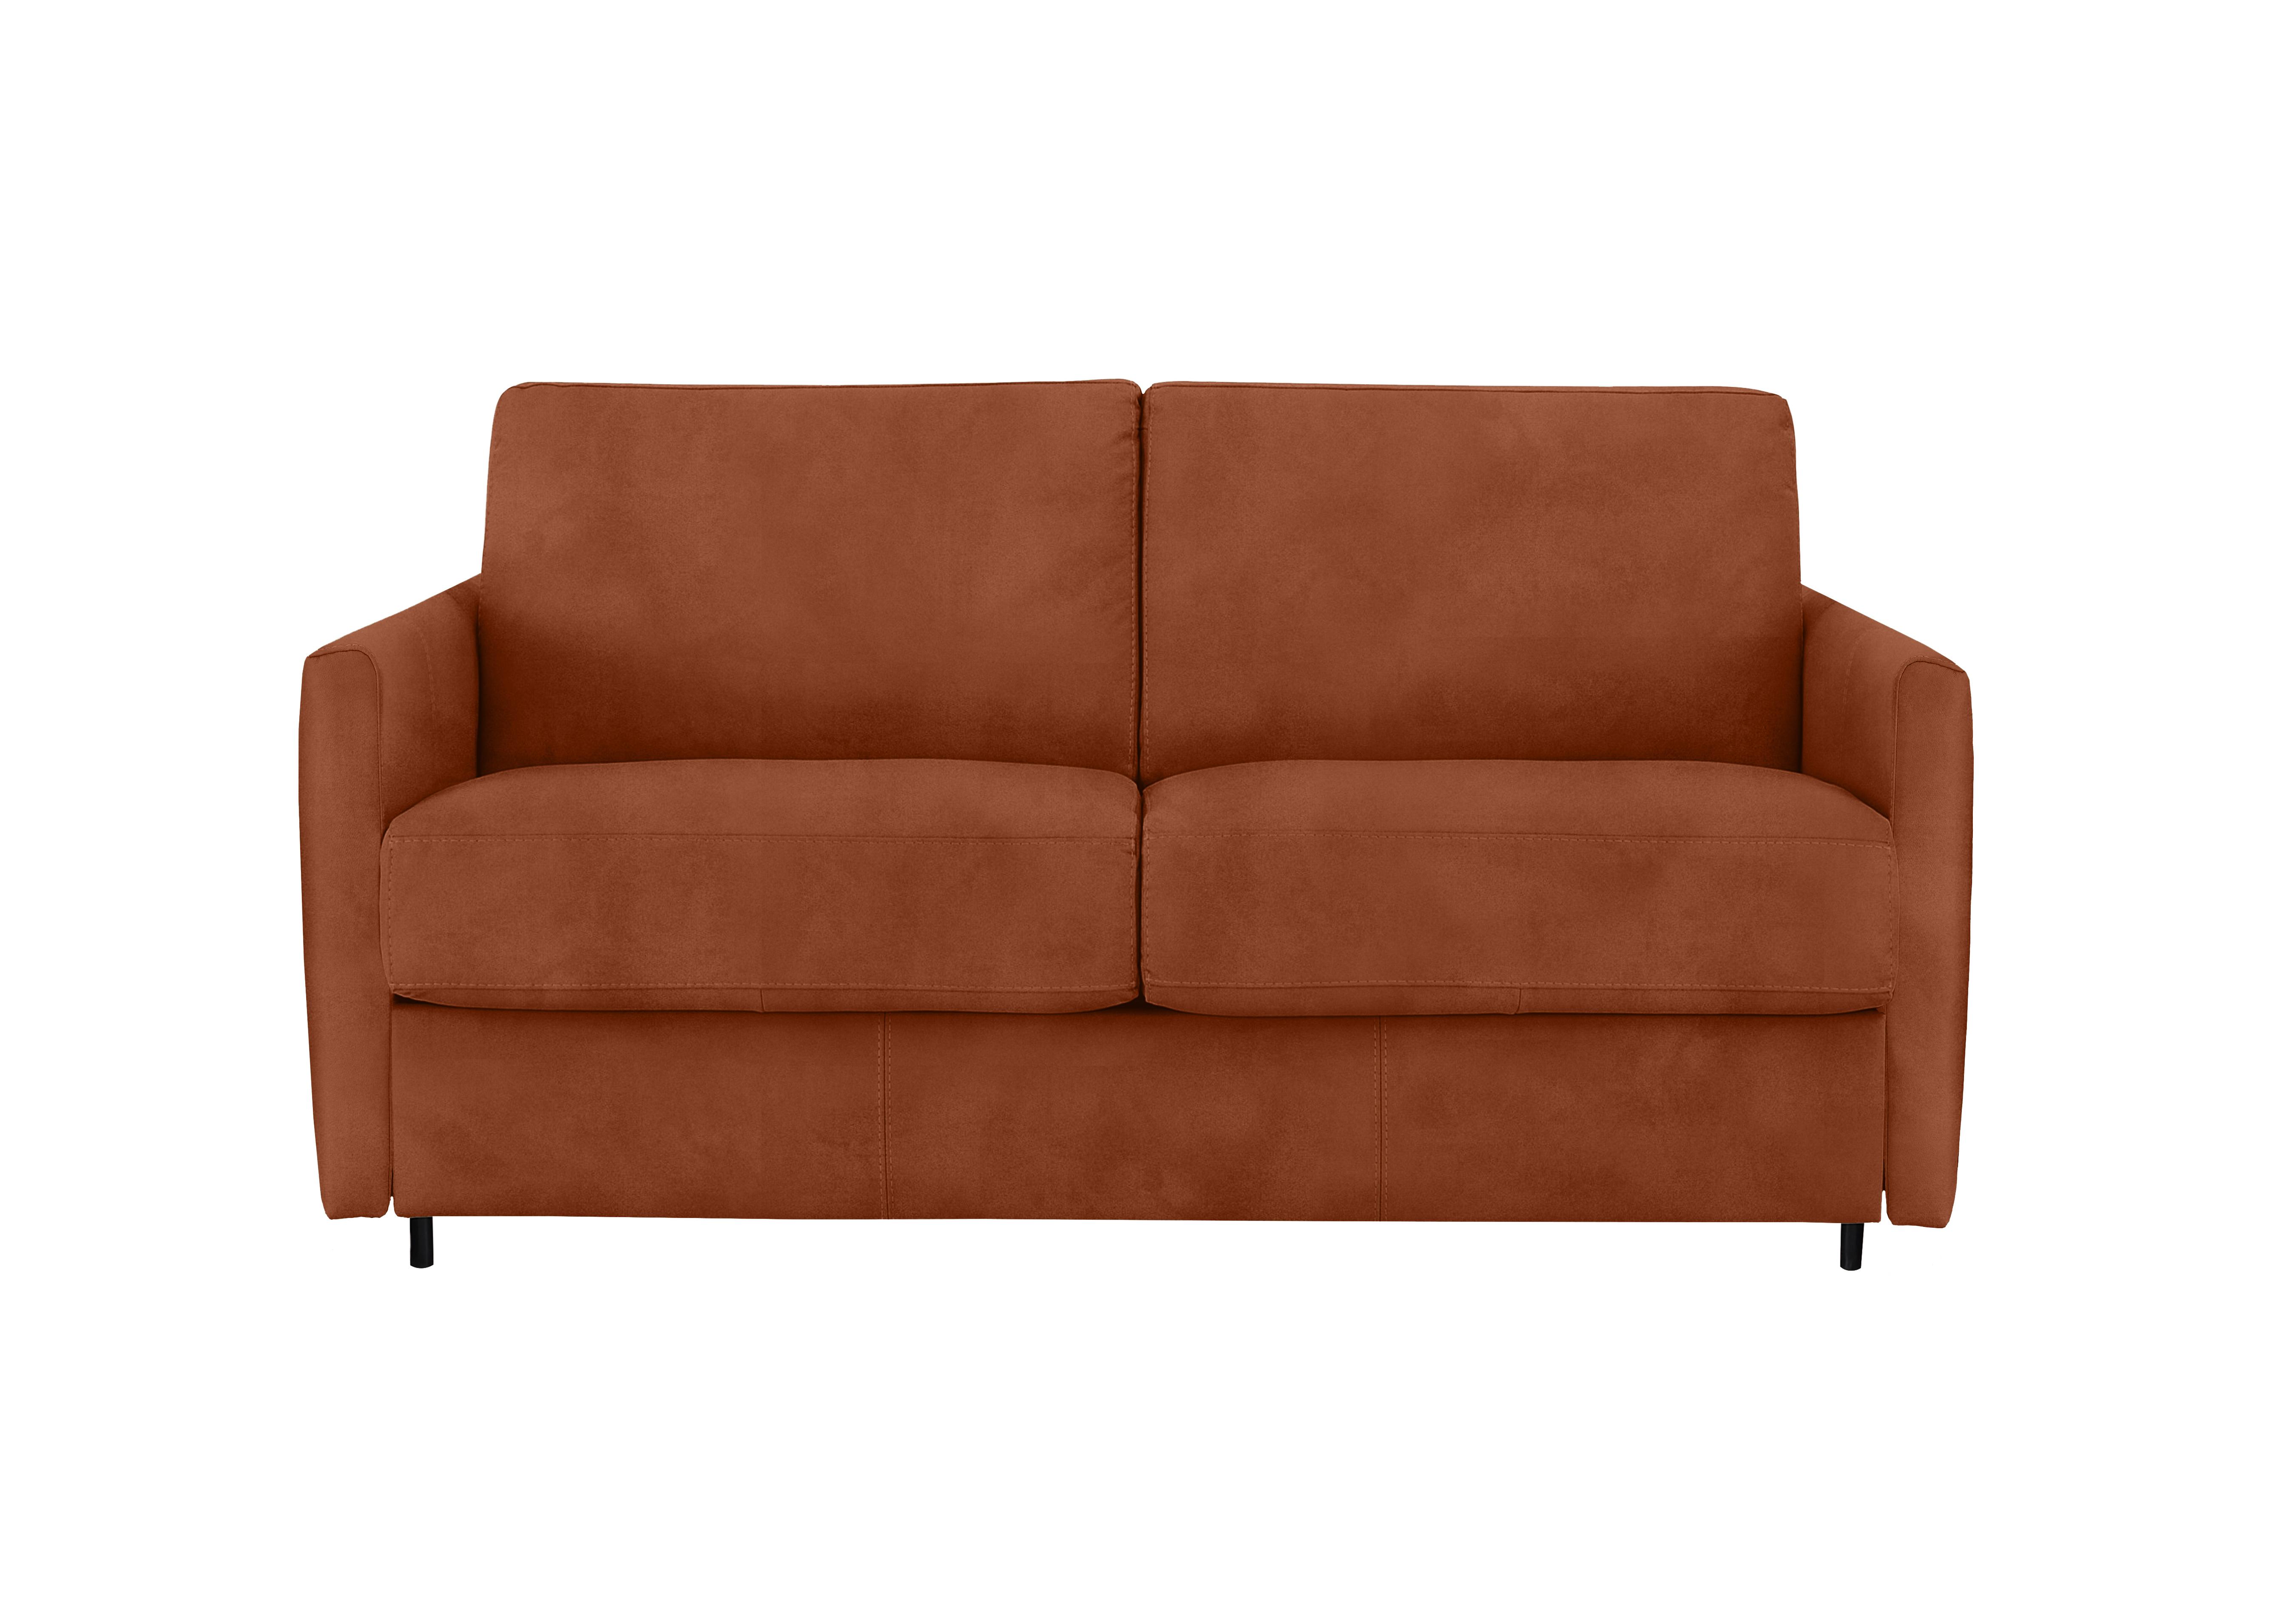 Alcova 2 Seater Fabric Sofa Bed with Slim Arms in Selma Mattone on Furniture Village